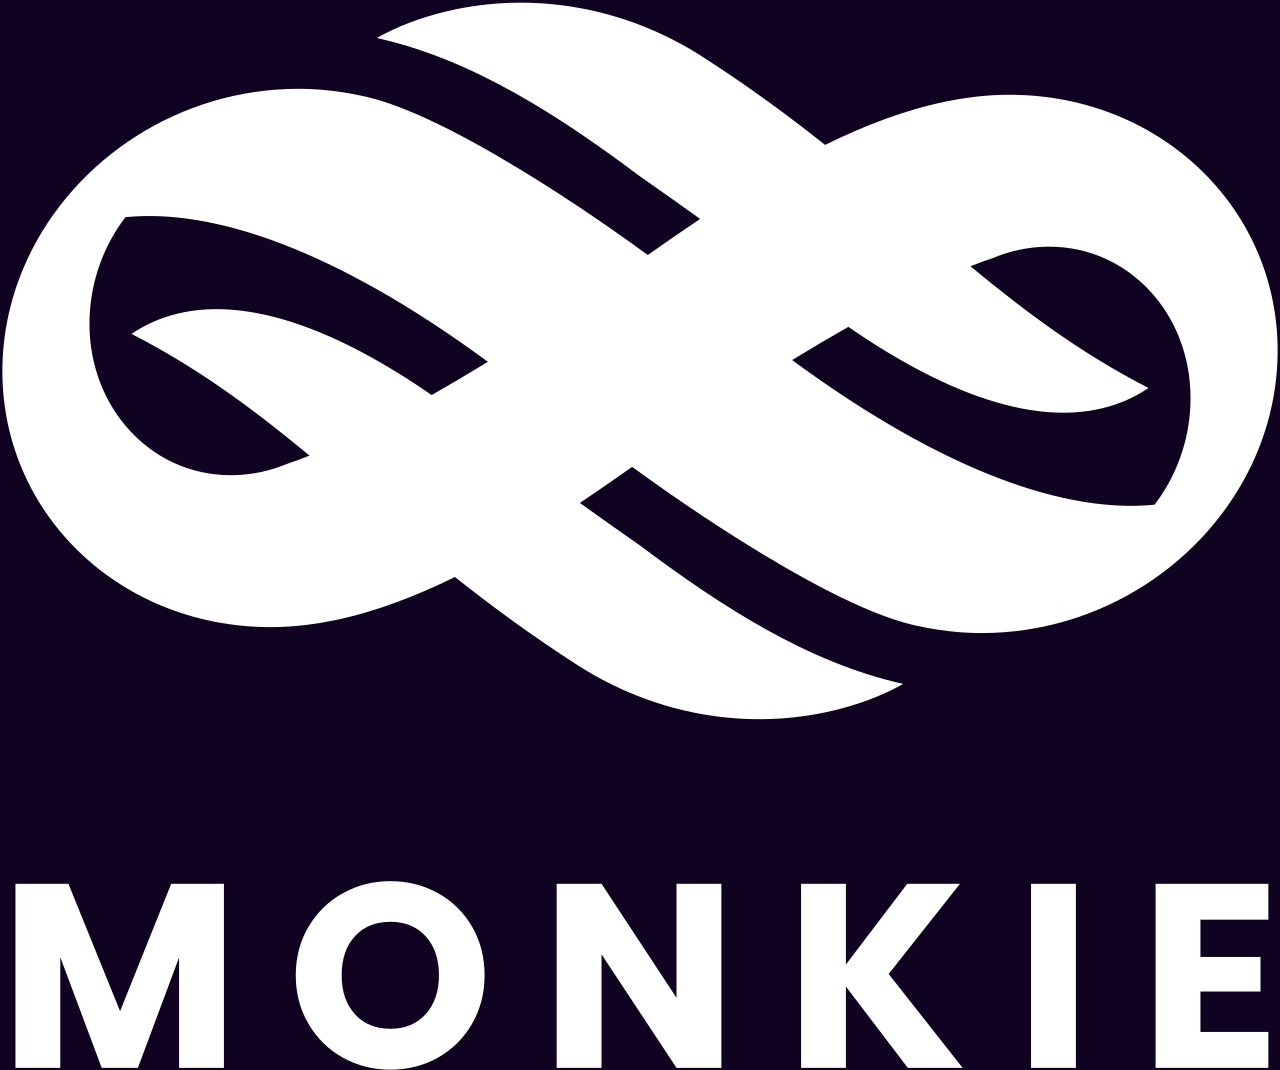 Monkie's logo